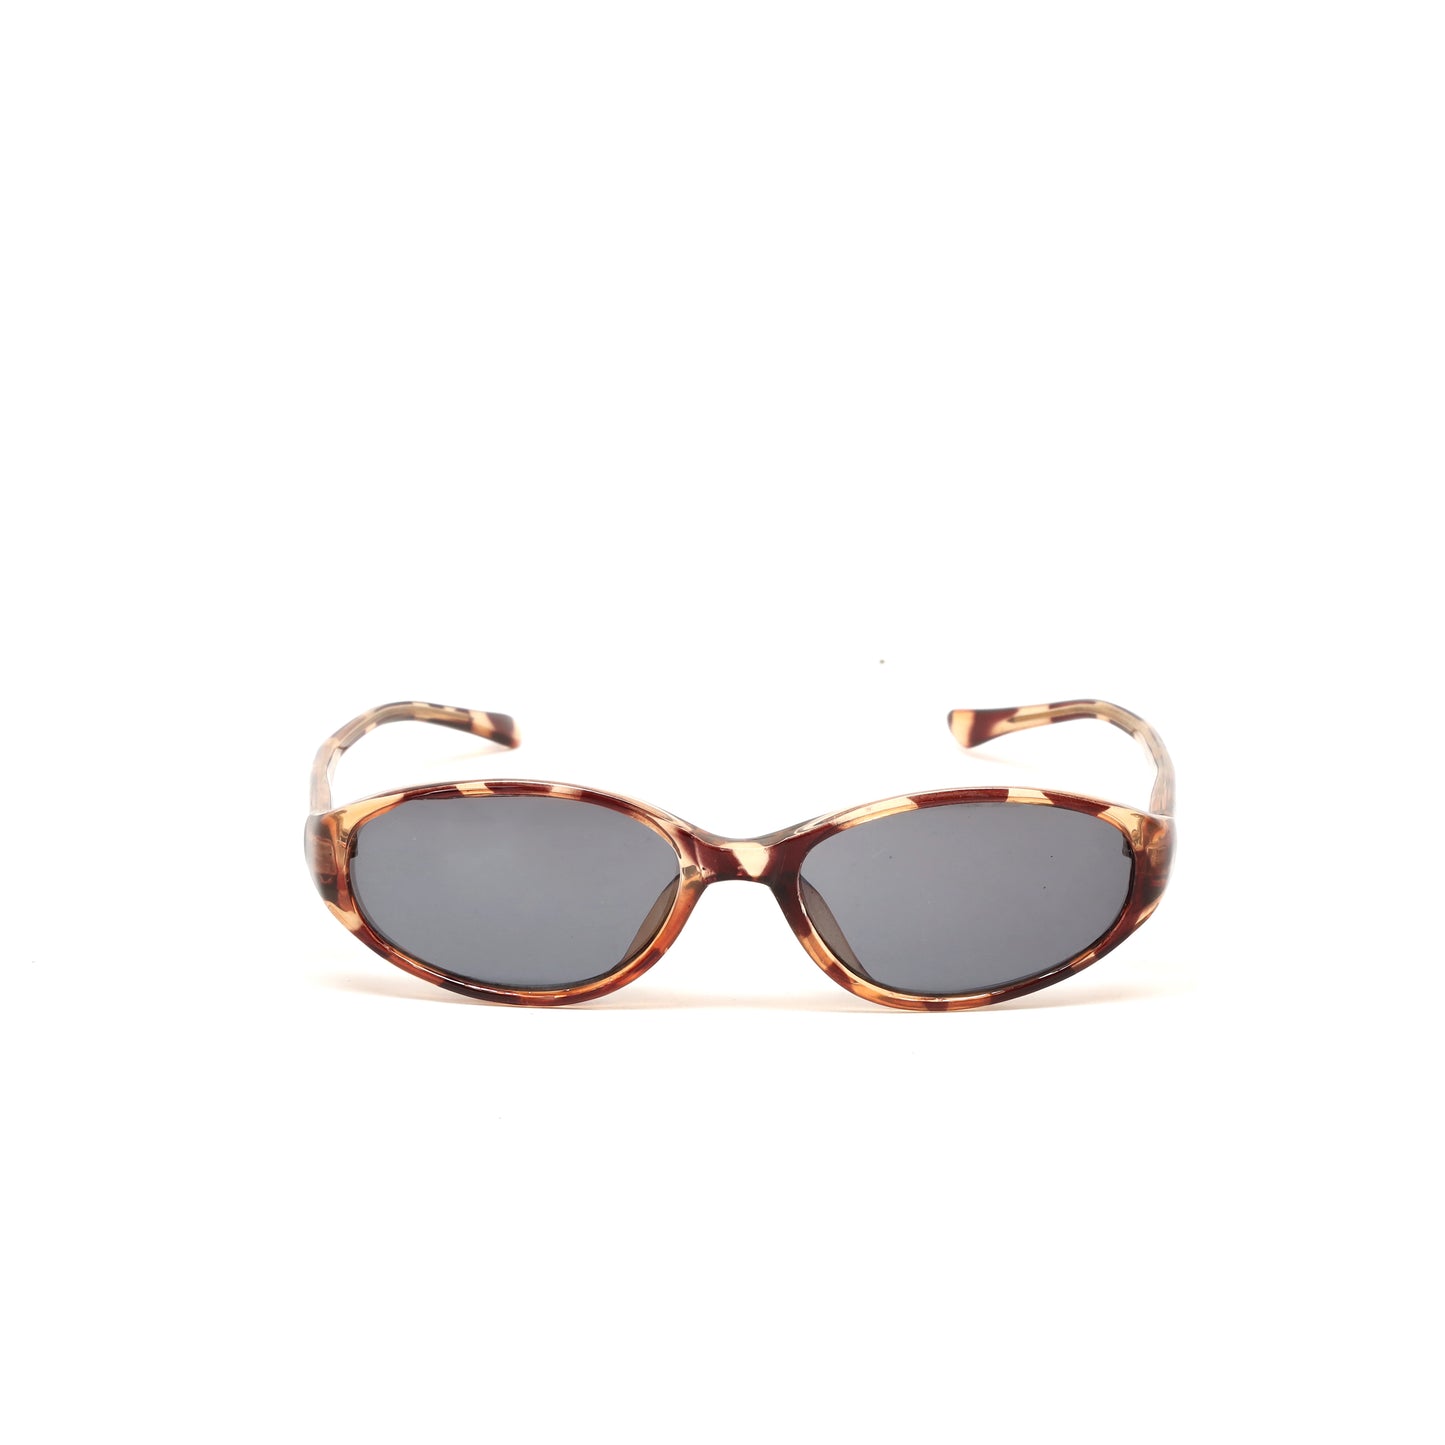 Vintage 1990s Chic Standard Oval Frame Sunglasses - Brown